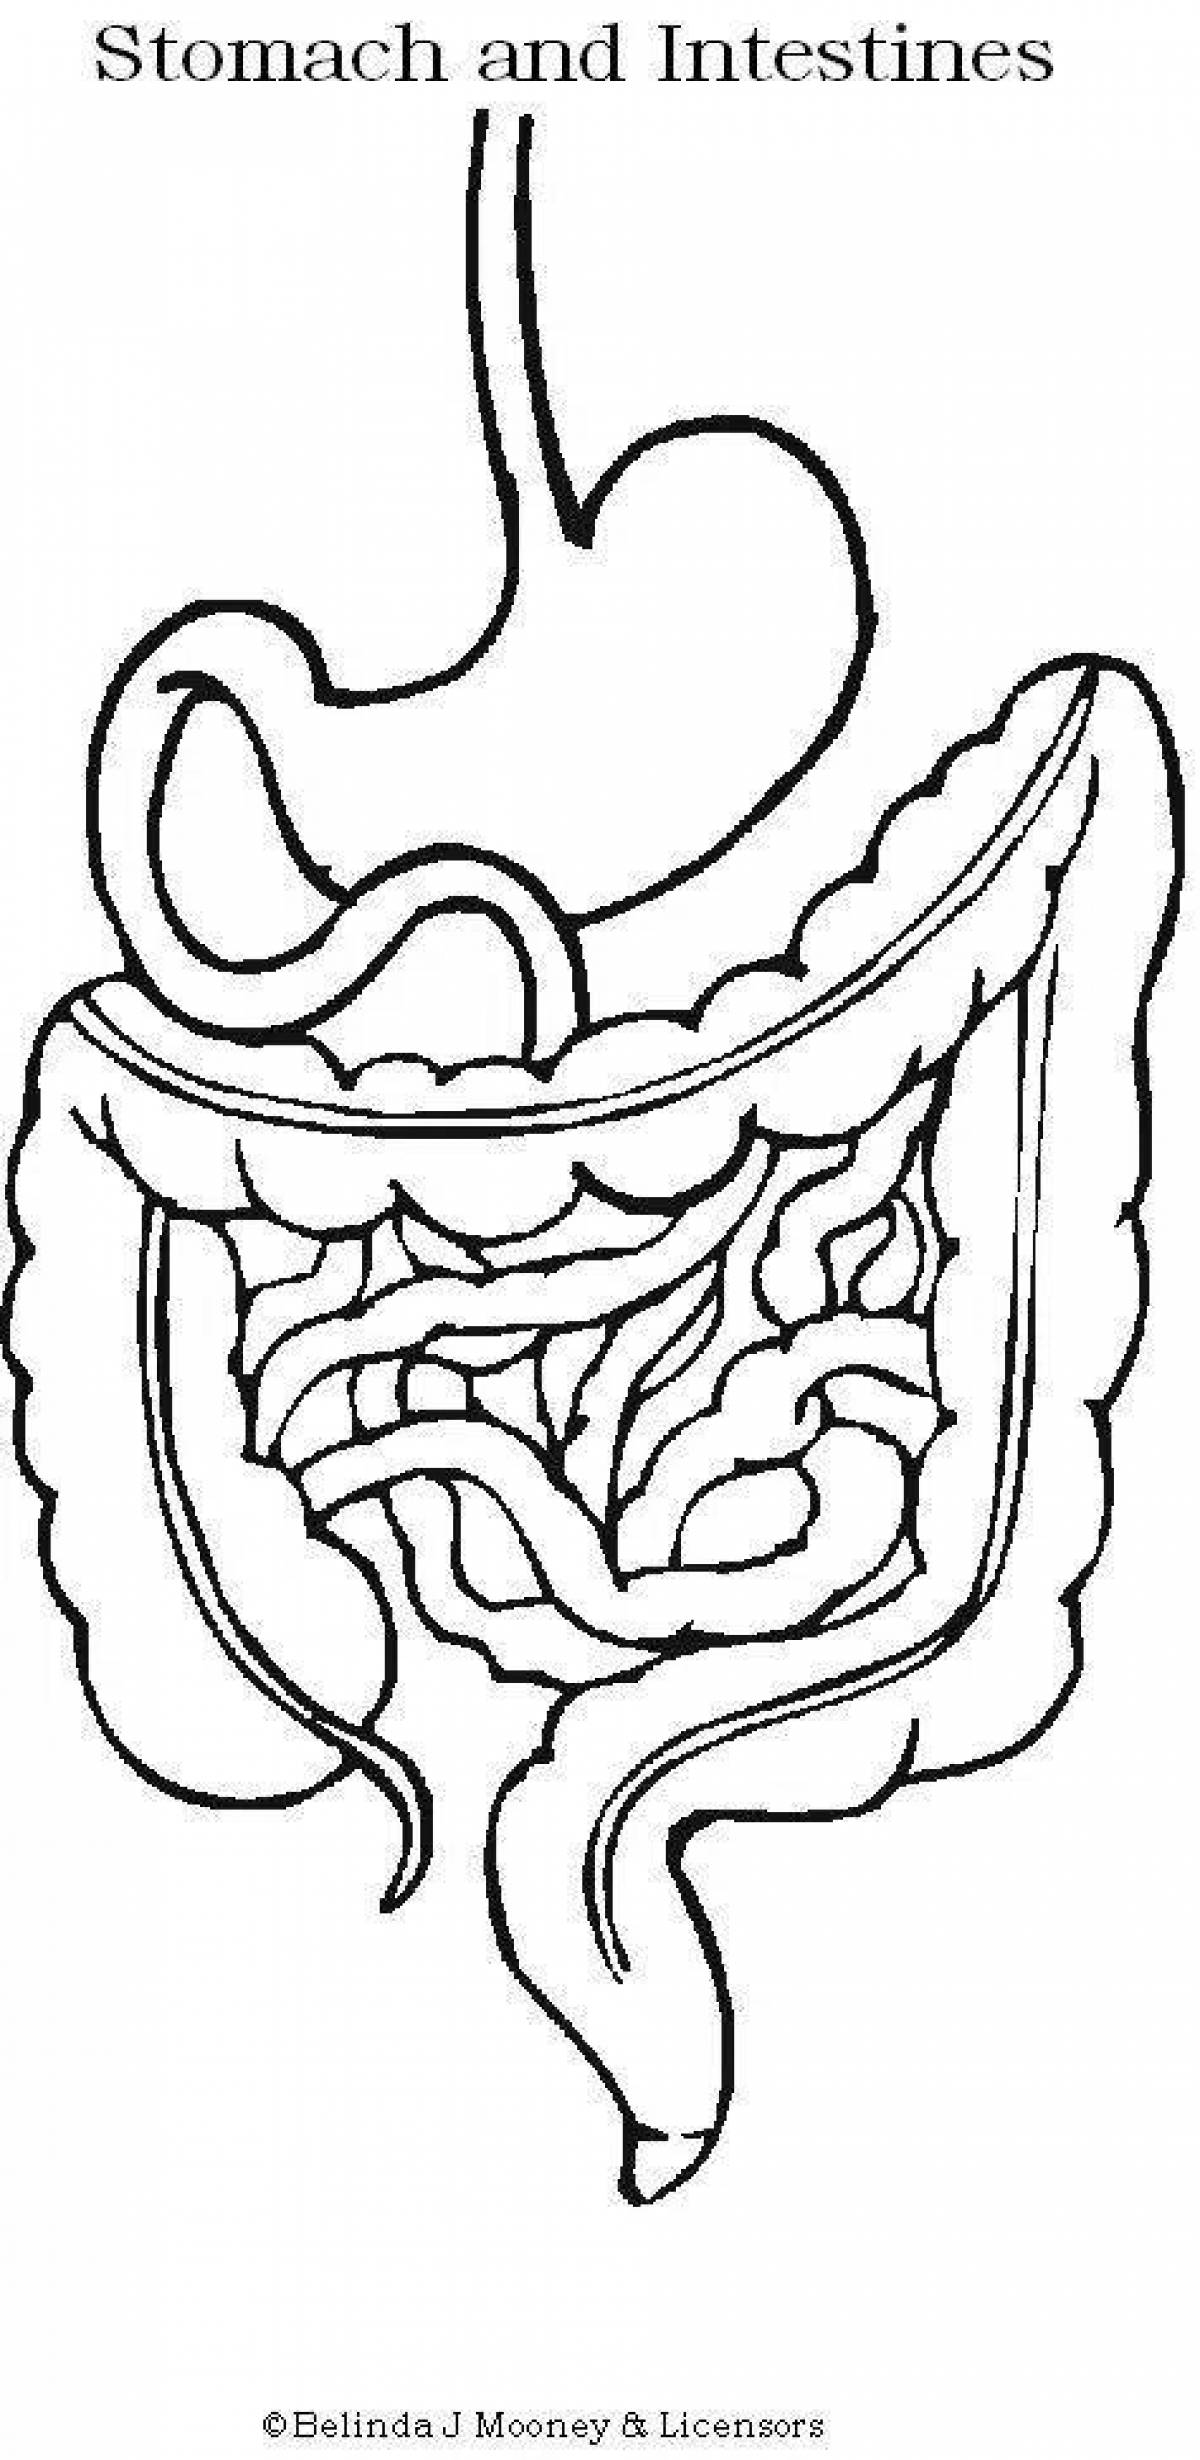 Human digestive system #8